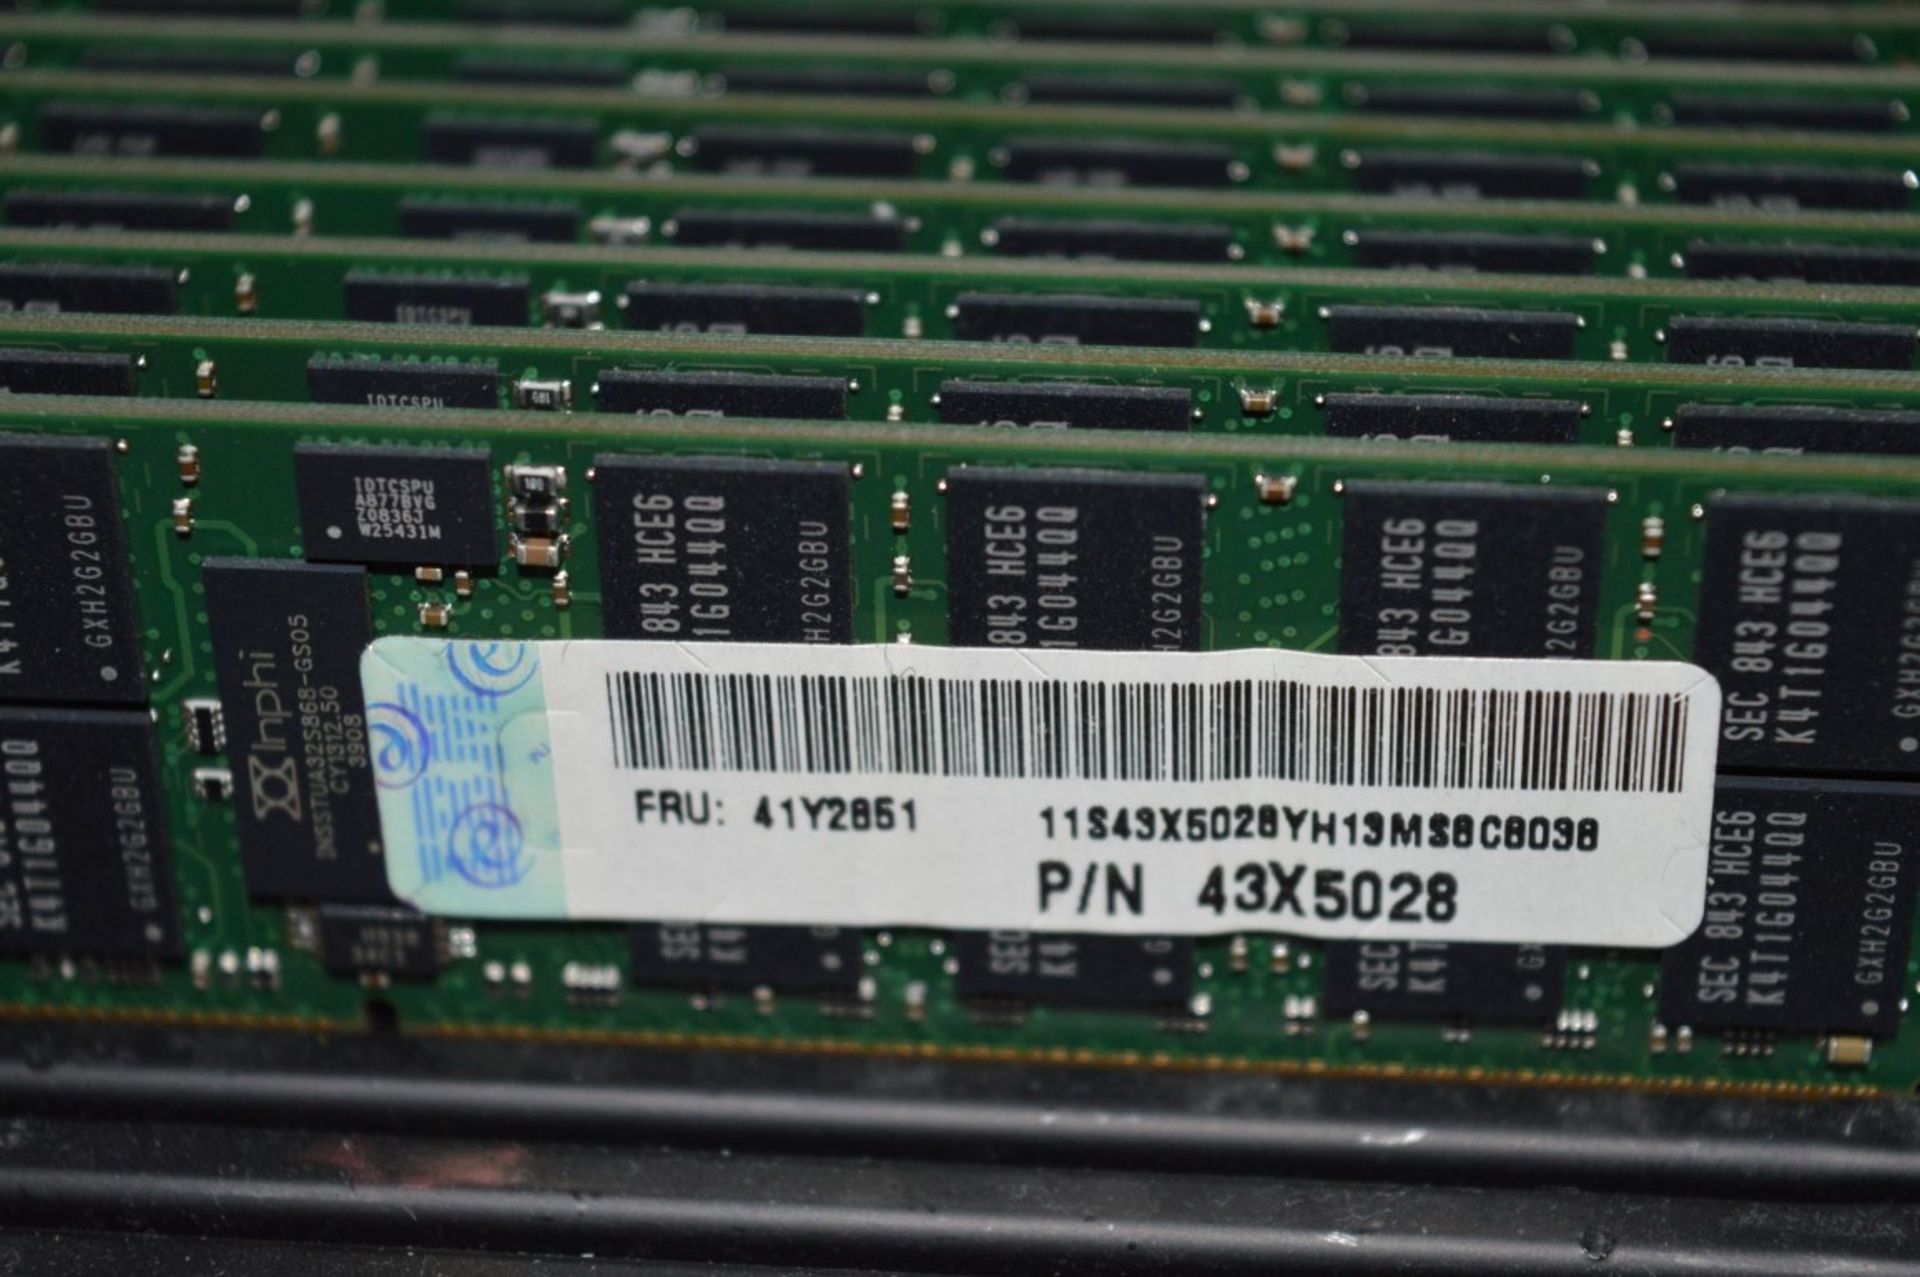 10 x Samsung 4GB PC2-5300 DDR2-667MHz ECC Reg CL5 240Pin SERVER DIMM Ram Modules - Part No: - Image 3 of 3